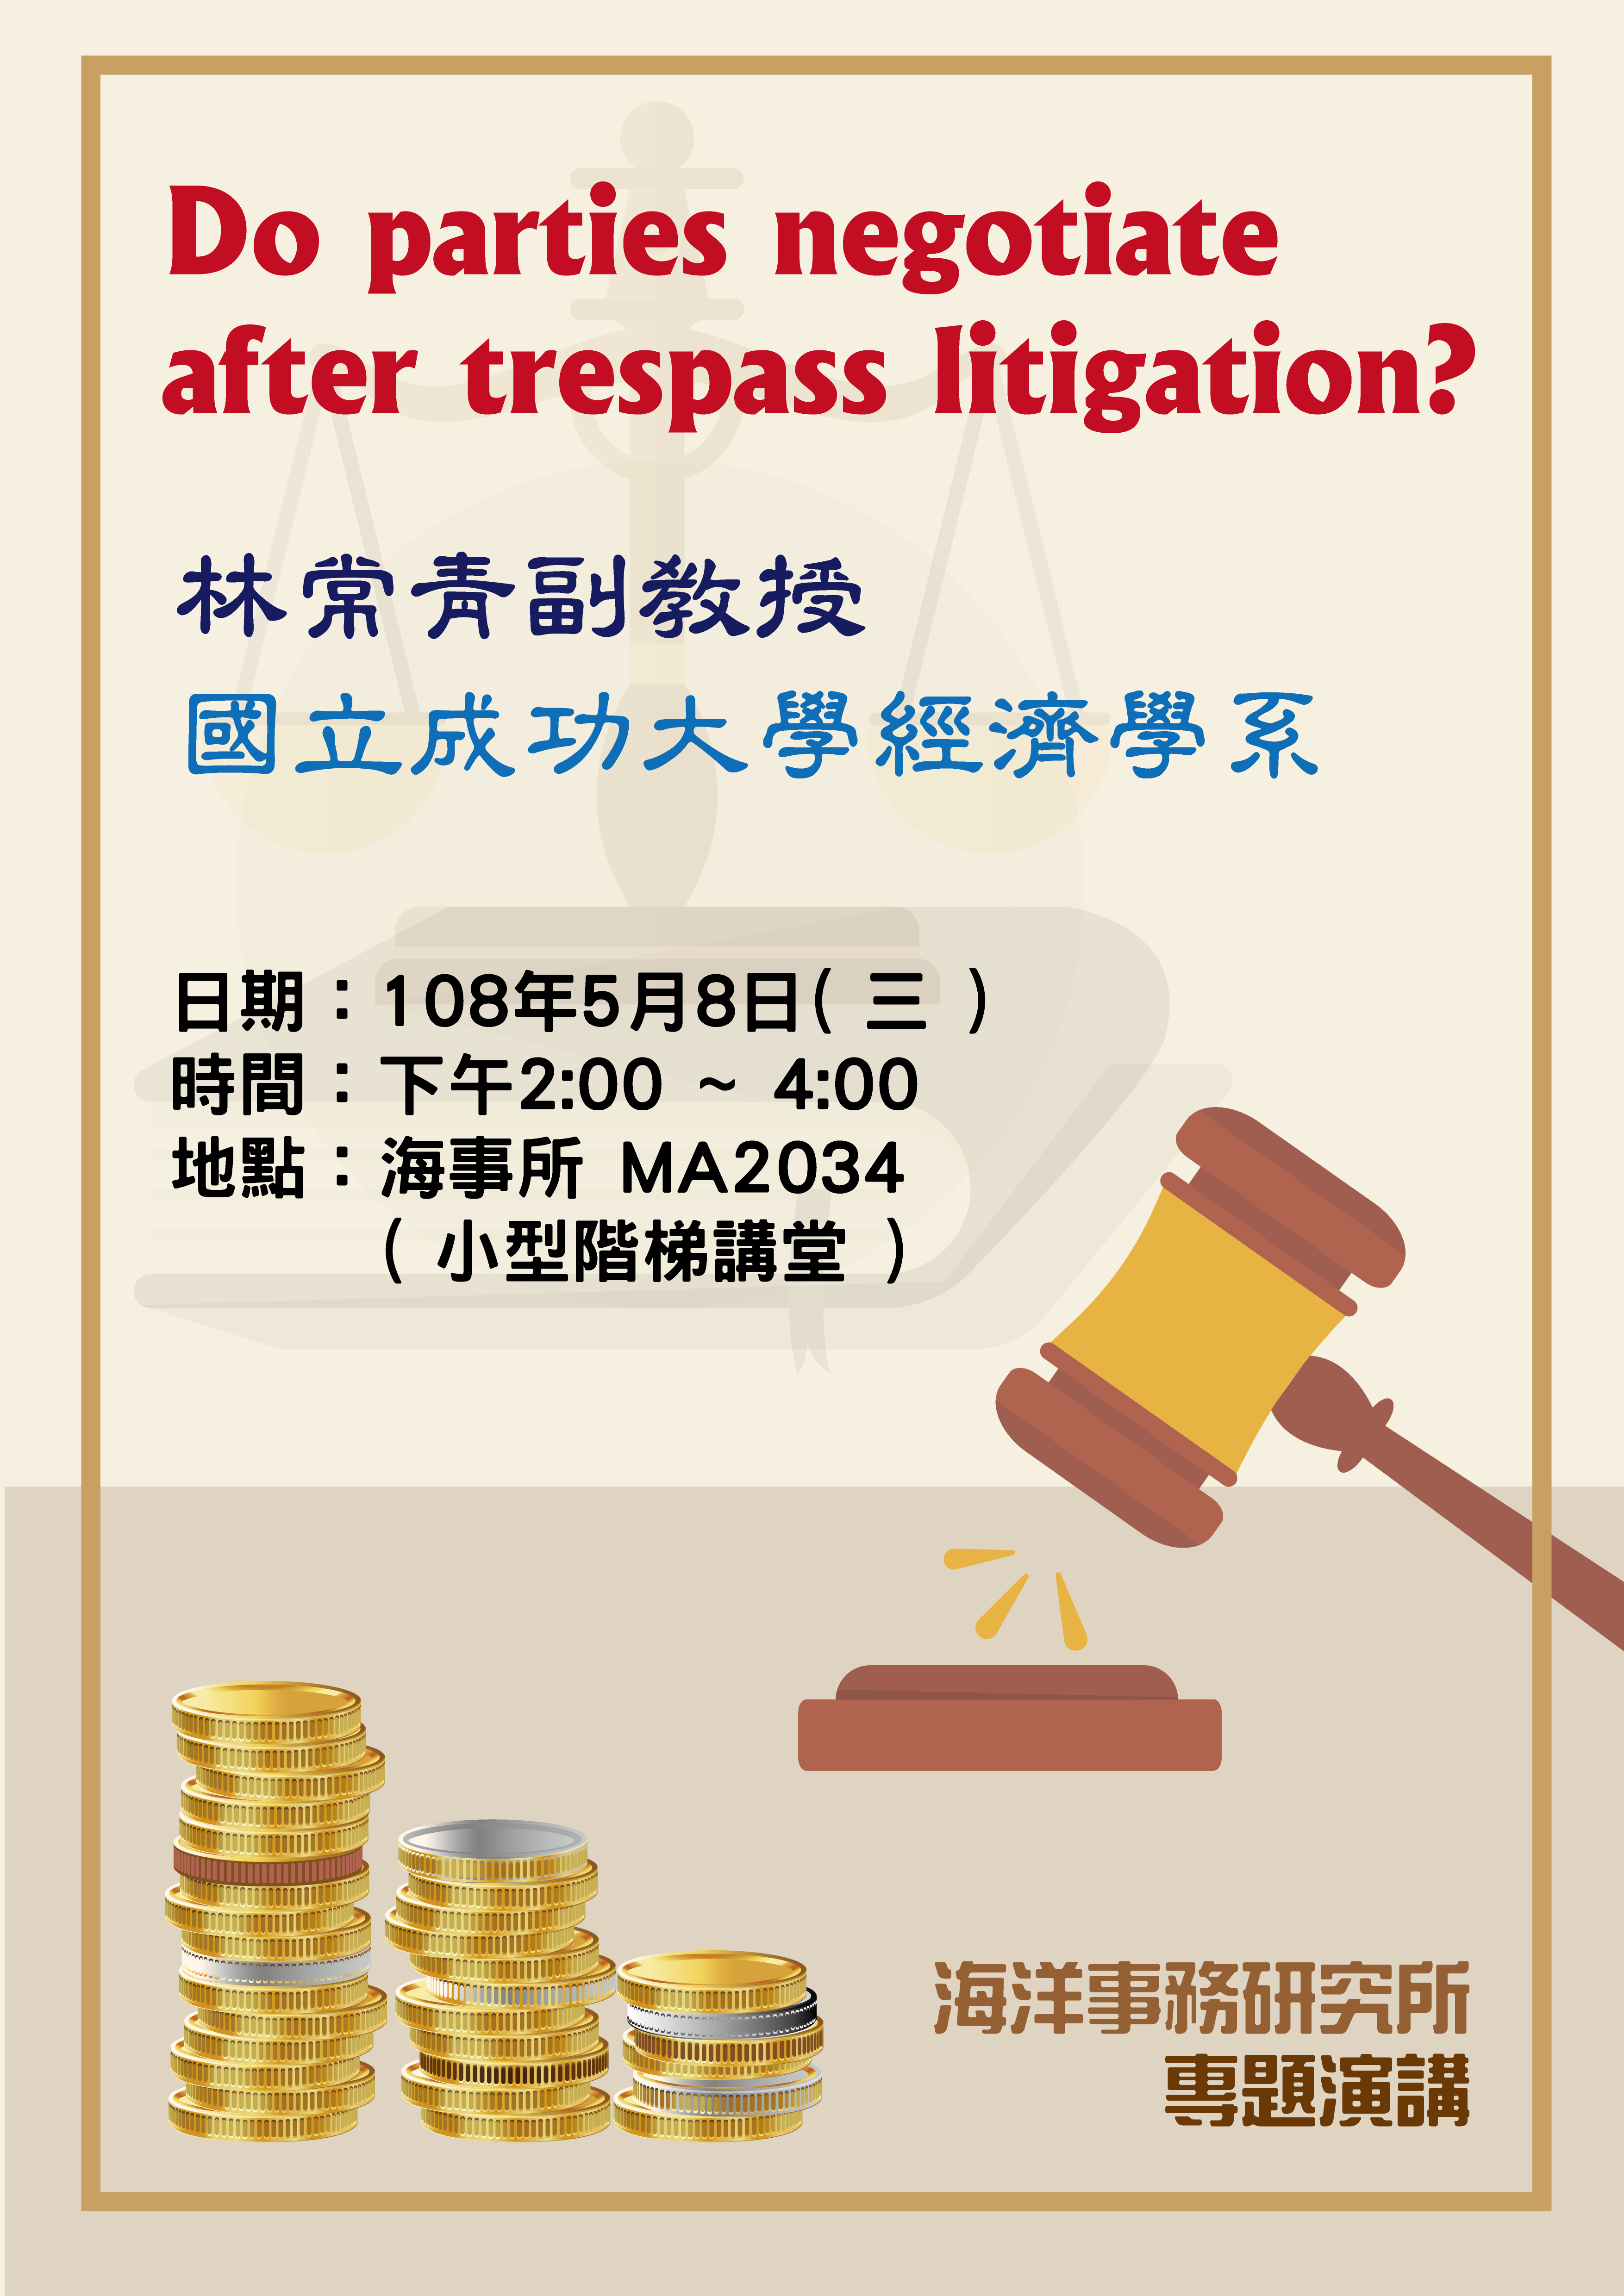 Do parties negotiate after trespass litigation?